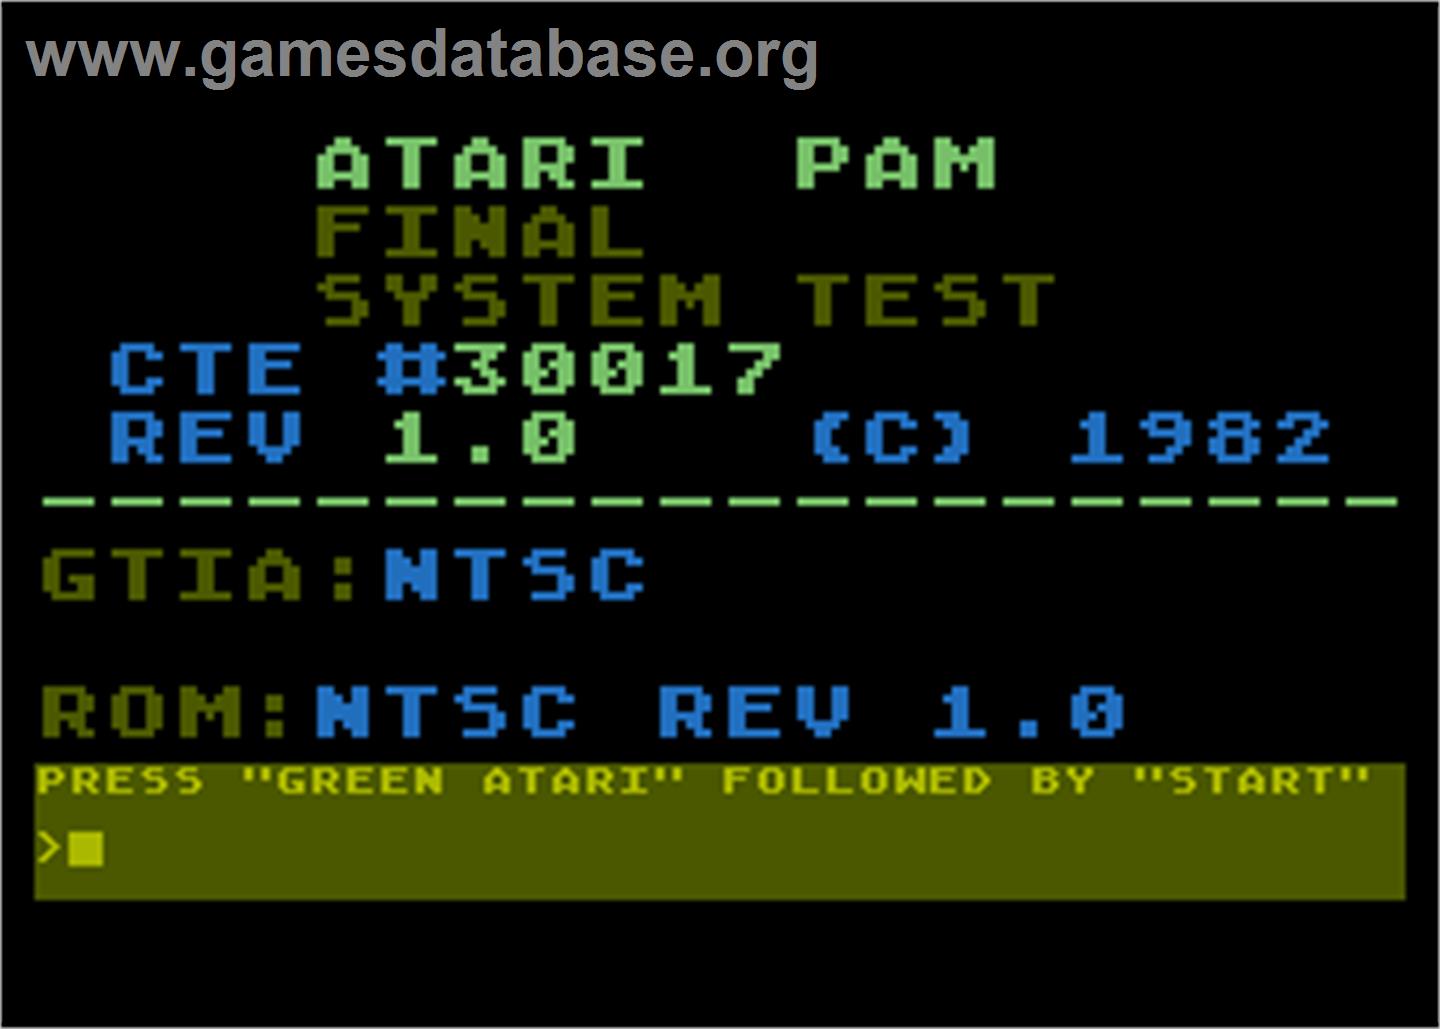 Atari PAM: System Test - Atari 5200 - Artwork - Title Screen